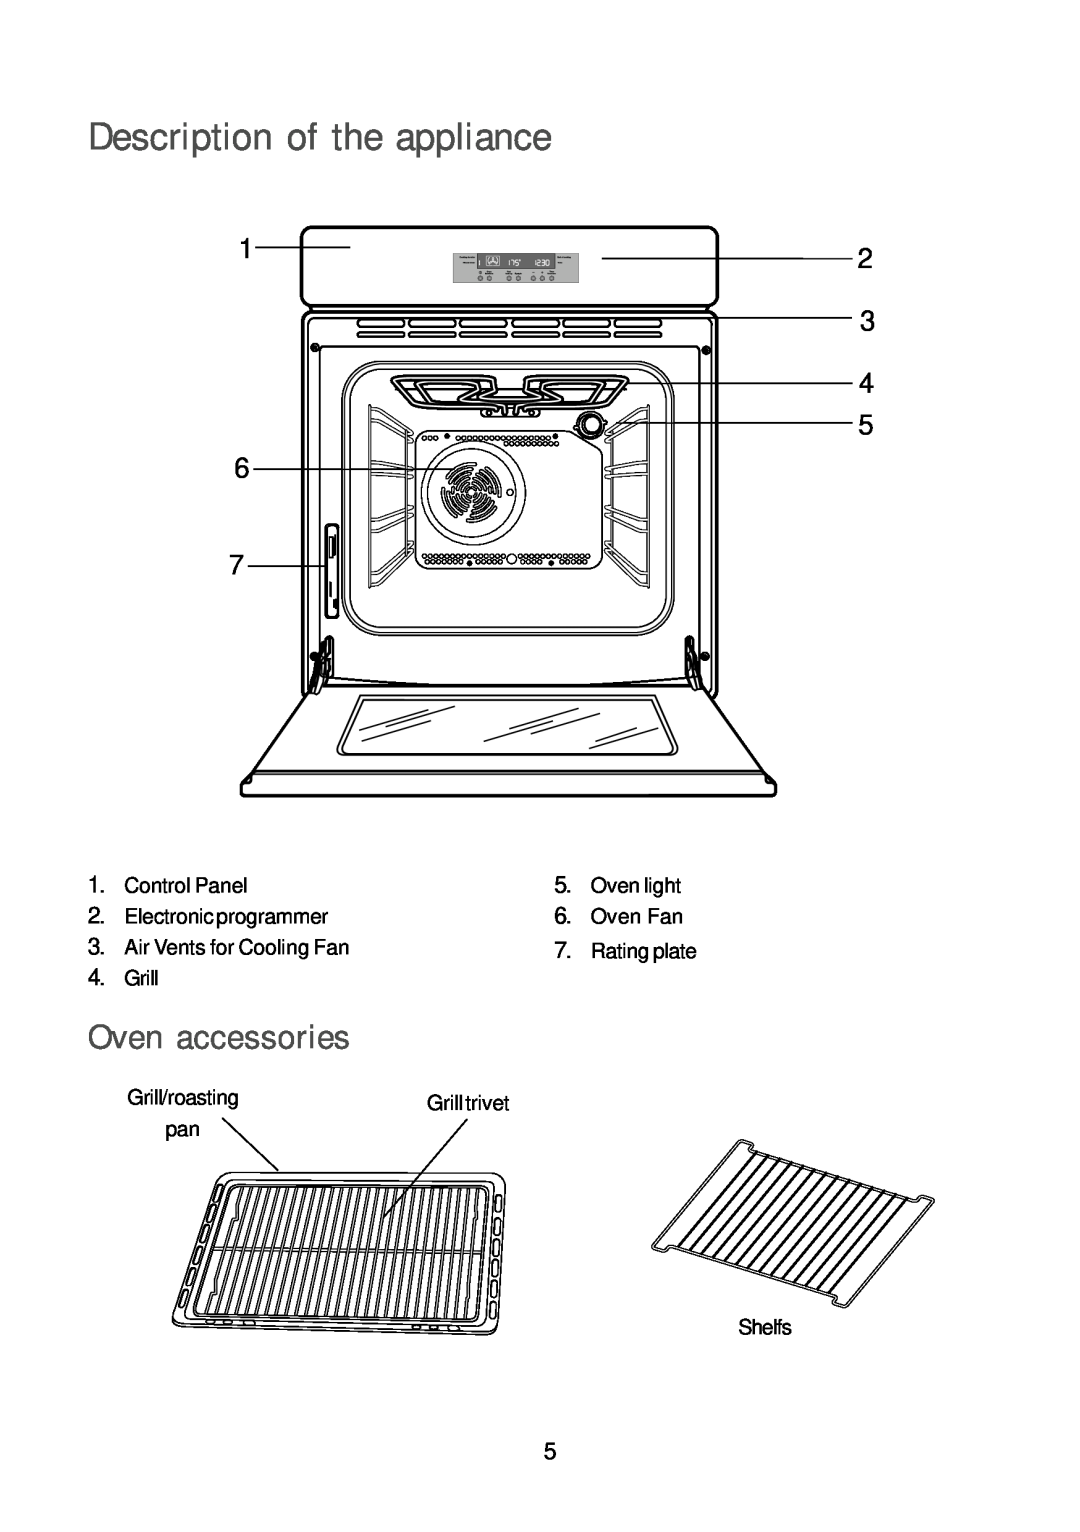 John Lewis JLBIOS664 Description of the appliance, Control Panel, Electronic programmer, Oven Fan, Grill, Shelfs 